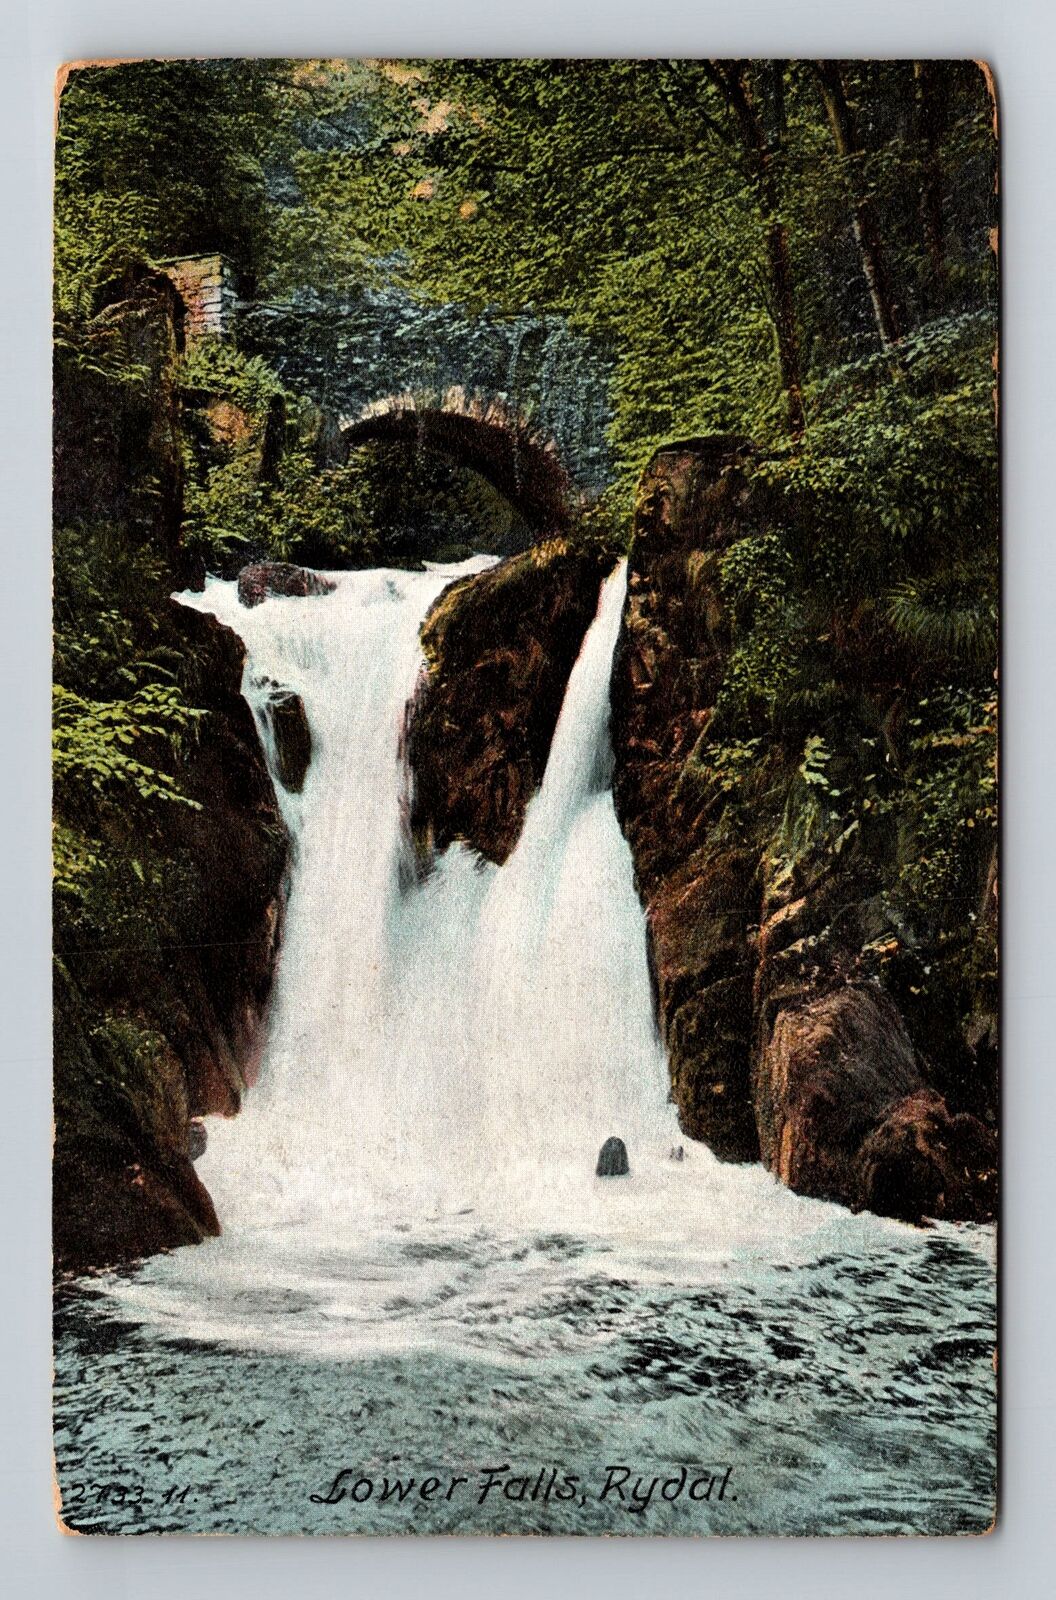 Rydal England-England, Lower Falls, Lake Region, Vintage Postcard